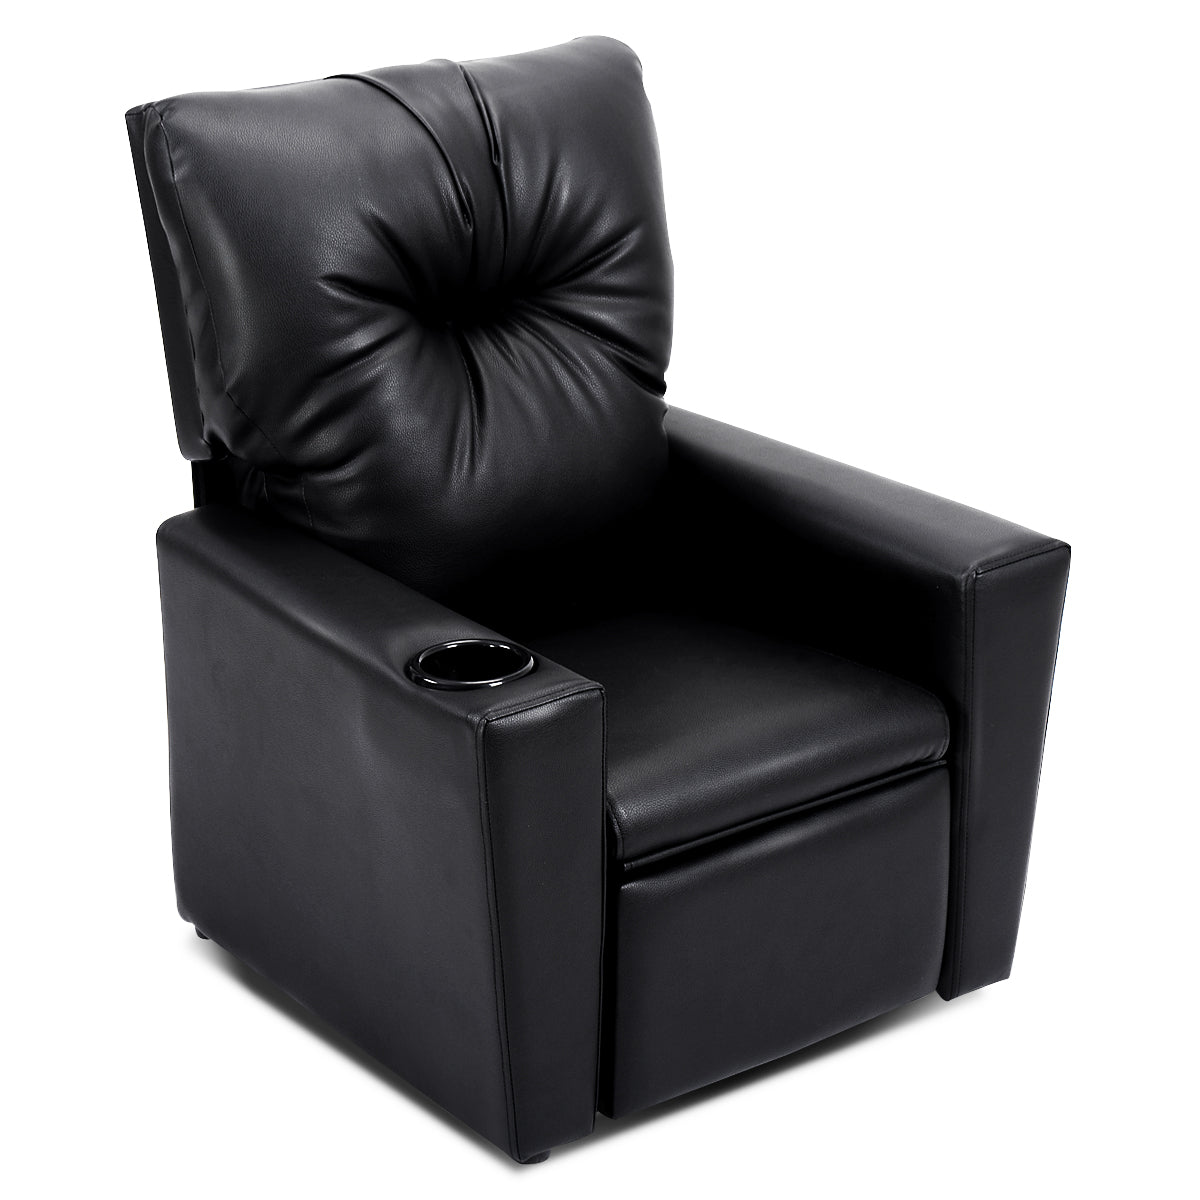 Kids Lounge Seat: Adjustable with High Backrest and Armrest in Black